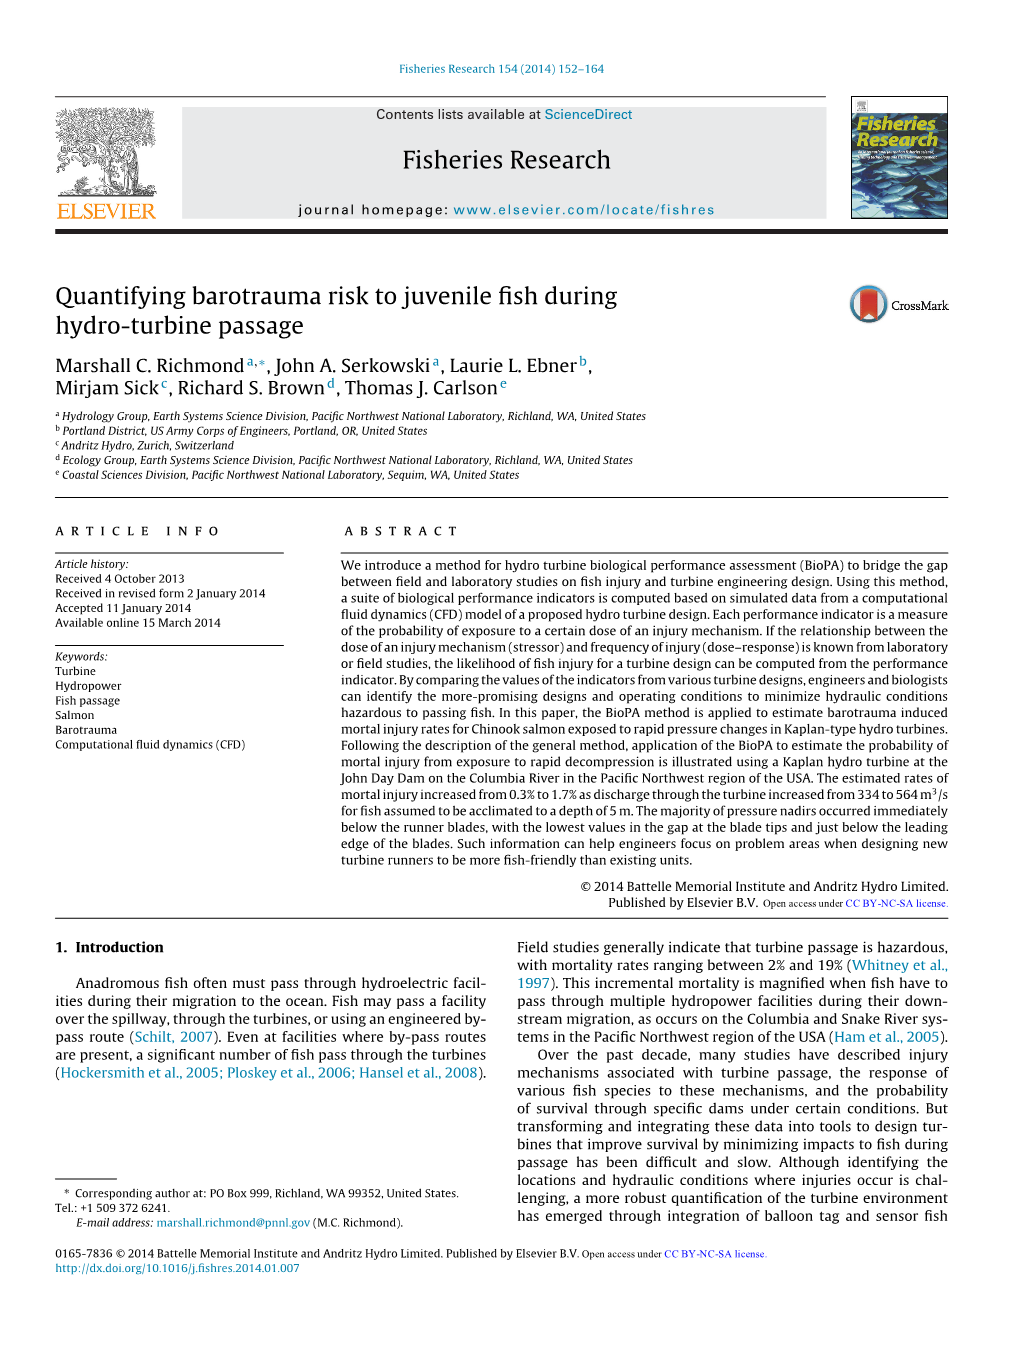 Quantifying Barotrauma Risk to Juvenile Fish During Hydro-Turbine Passage